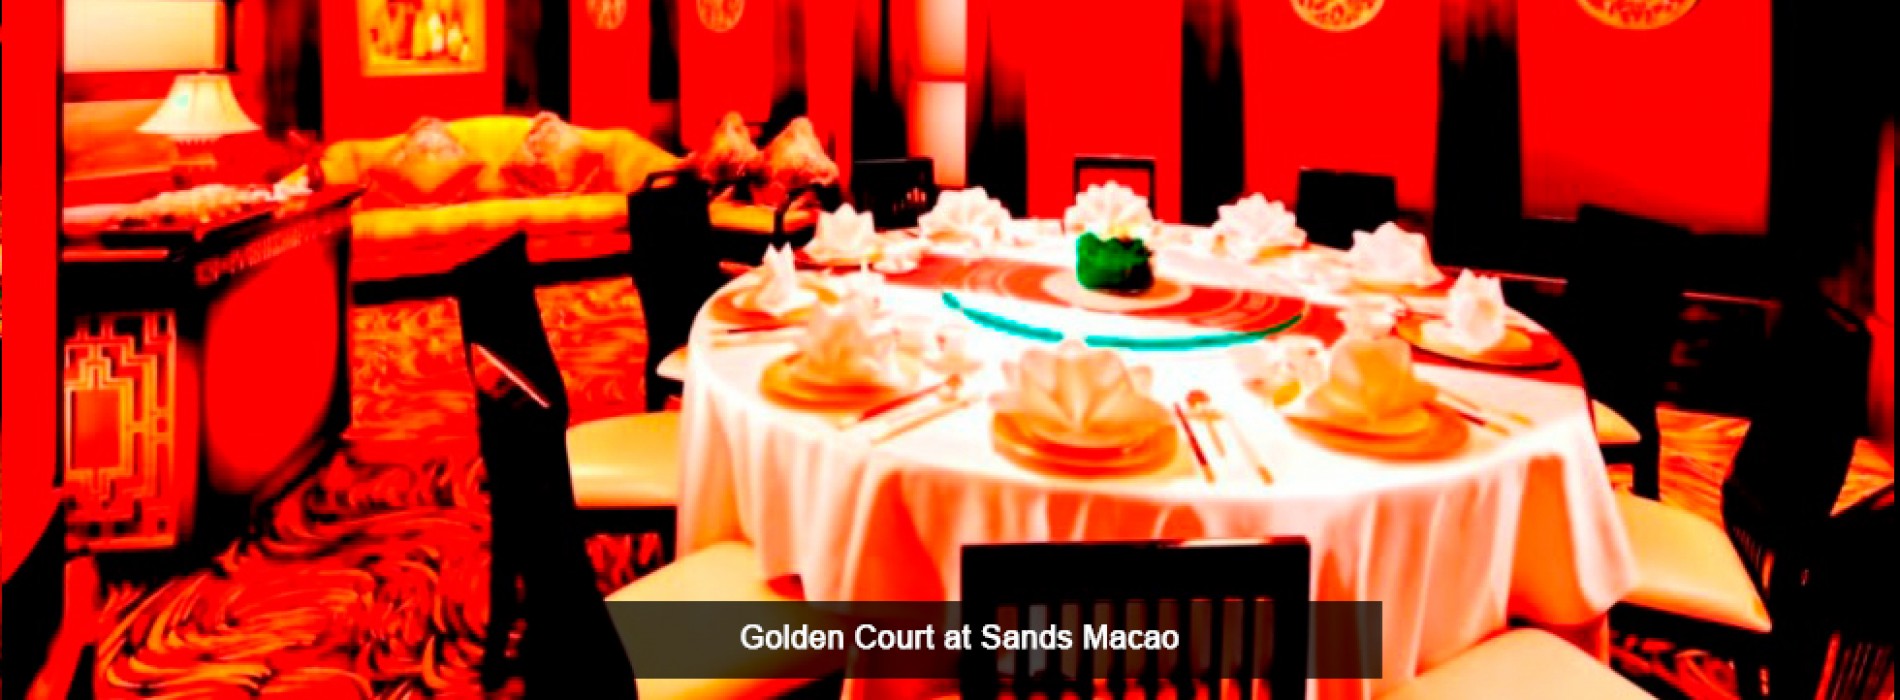 Eleven Sands Resorts Macao and Sands Macao Restaurants receive Wine Spectator Awards